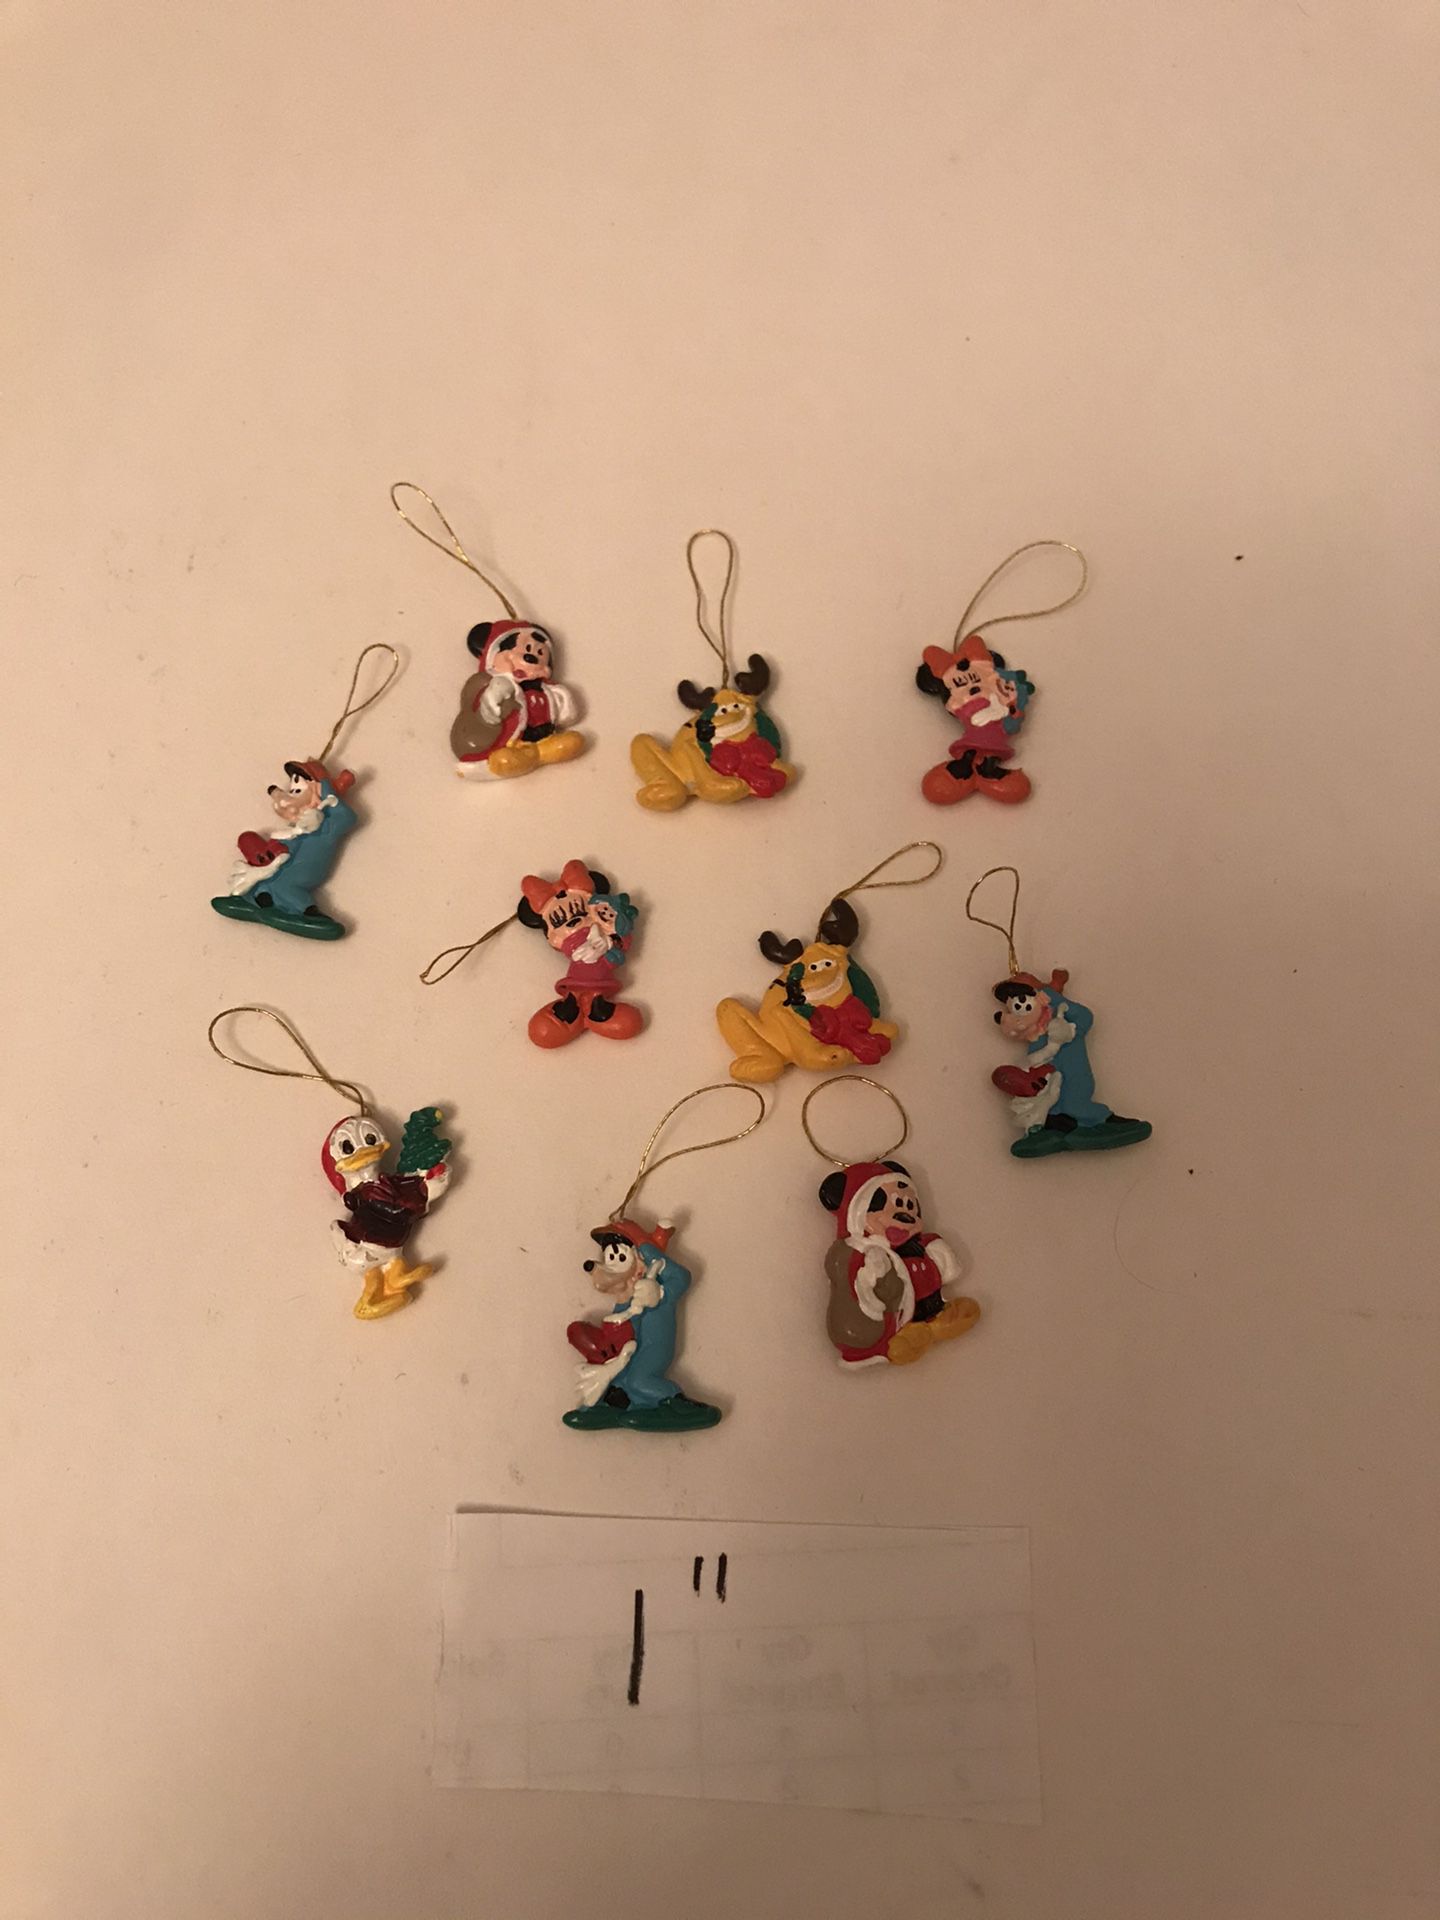 Collectible 1” Disney Christmas ornaments